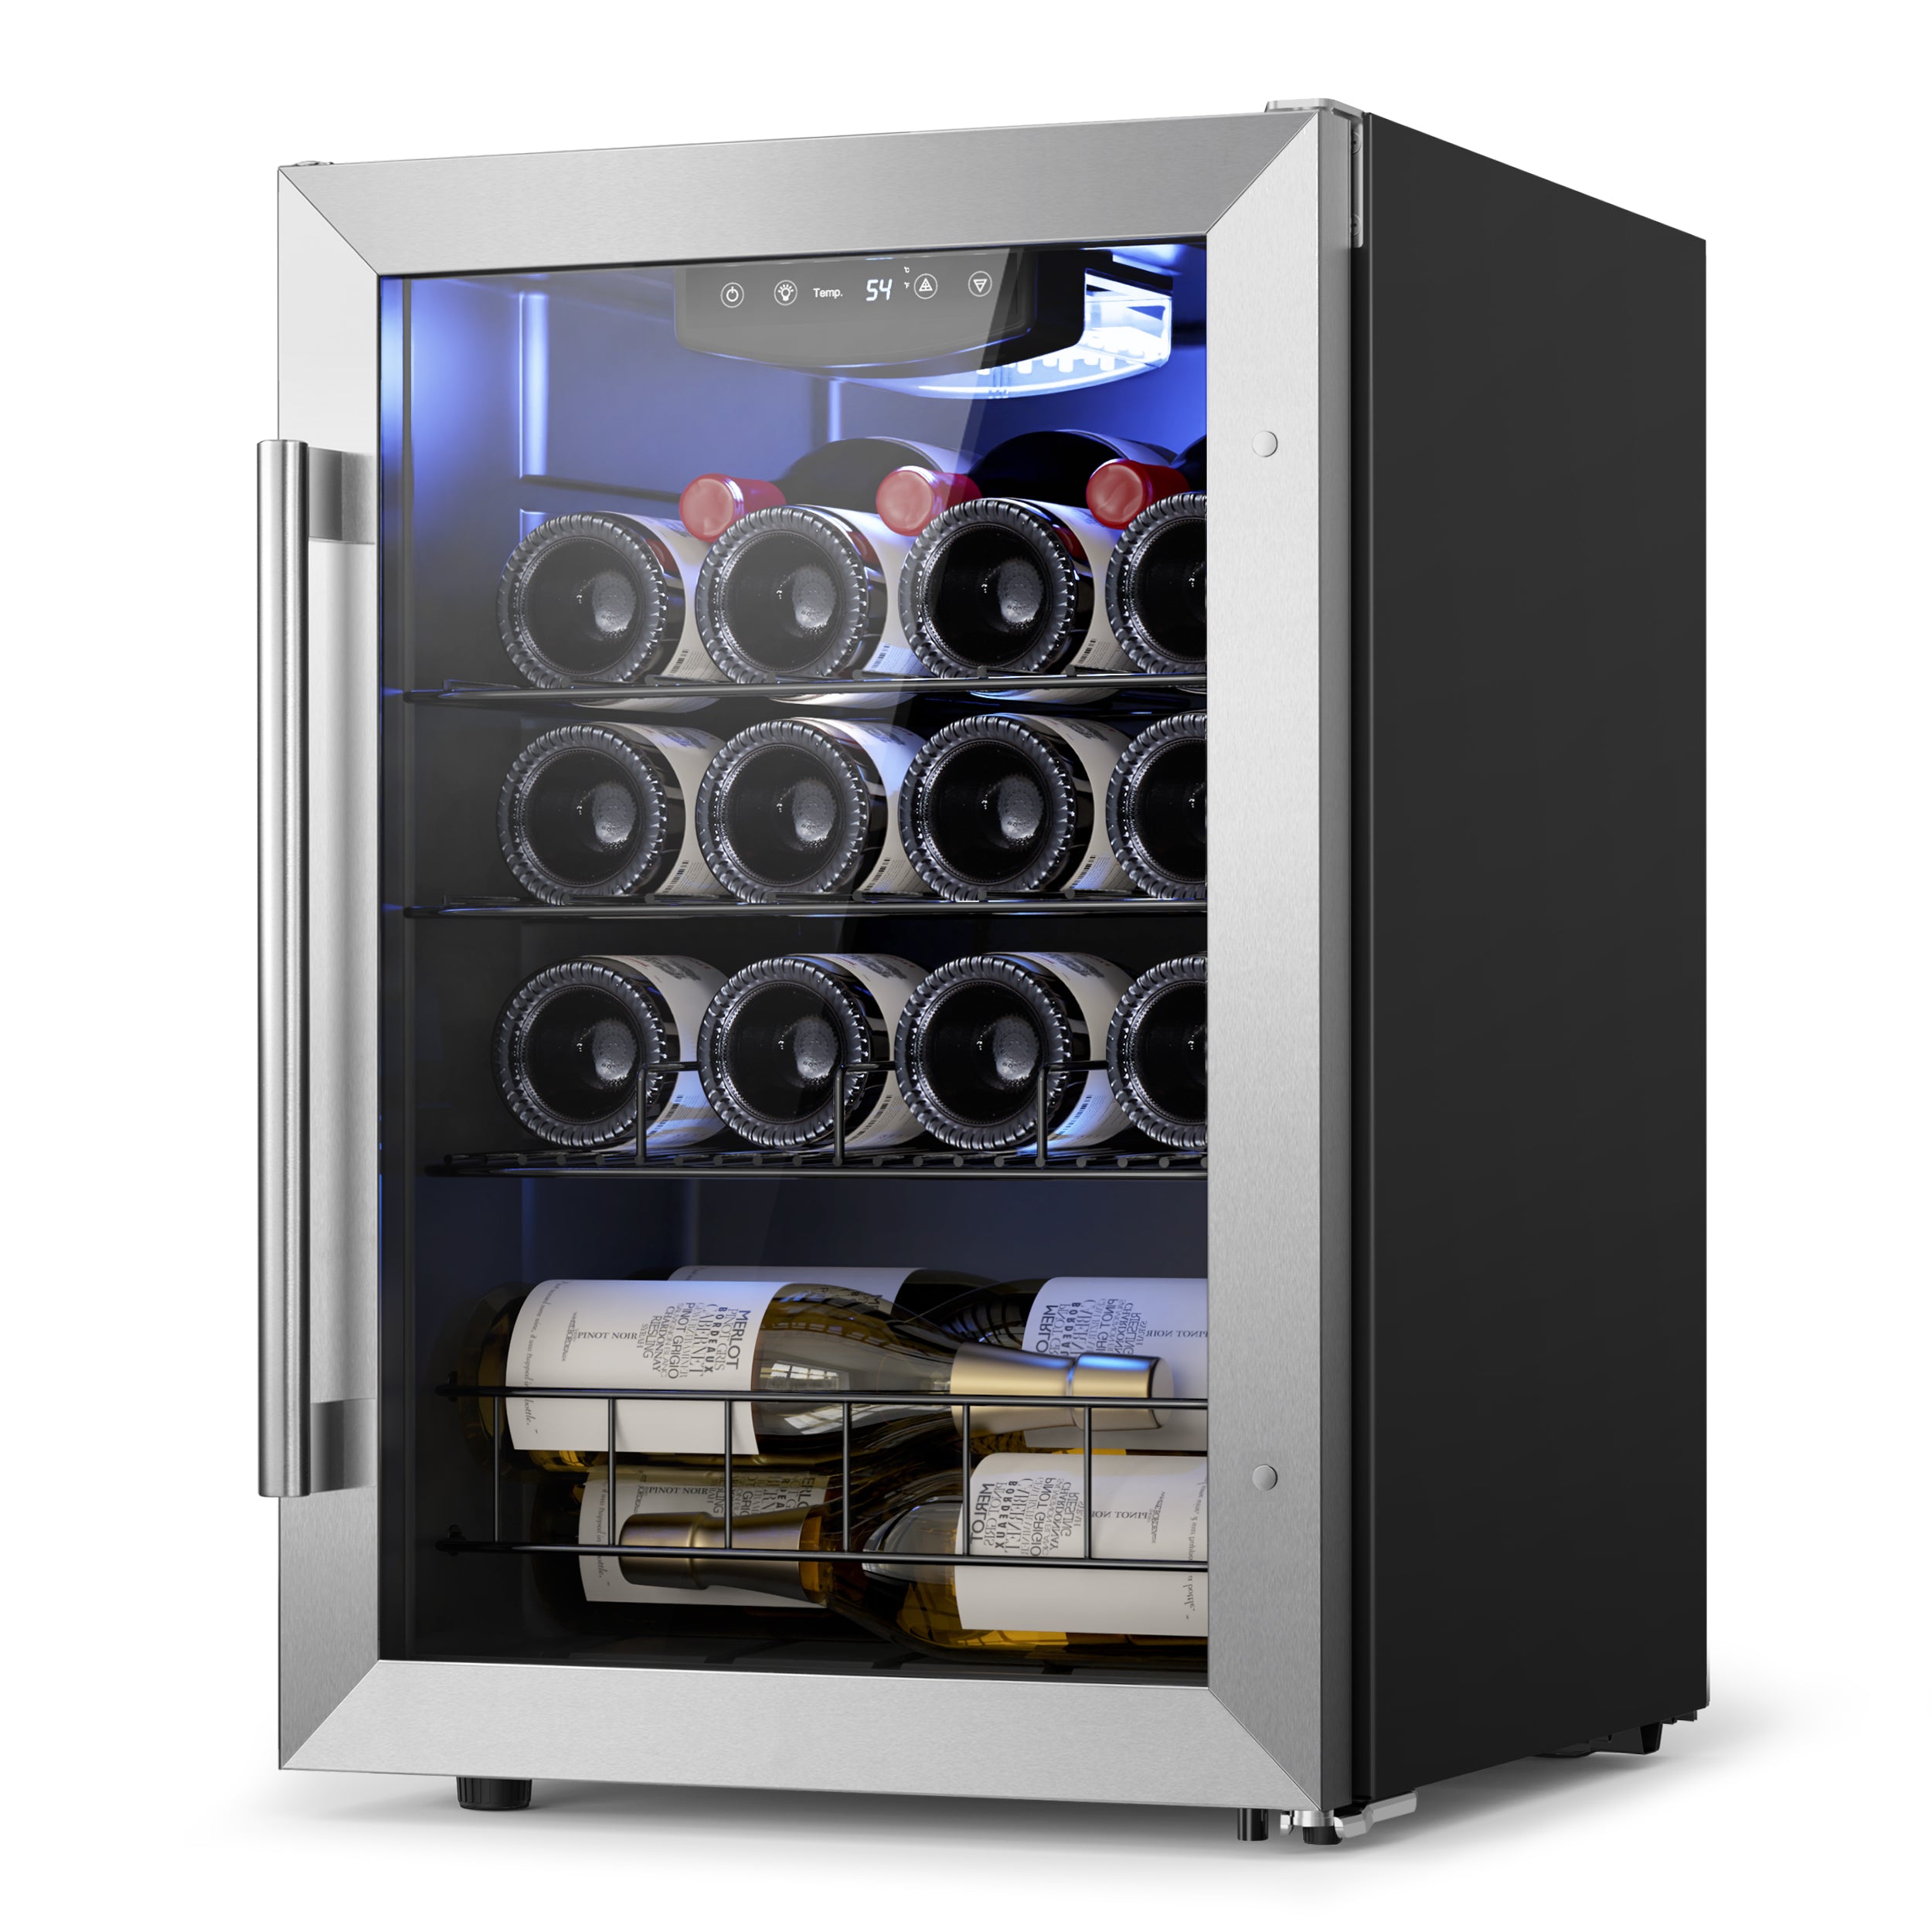 Yeego Z1 Wine Cooler Refrigerator, 20 Bottle Small Wine Fridge, Mini Freestanding Wine Cellars Glass Door for Home, Office